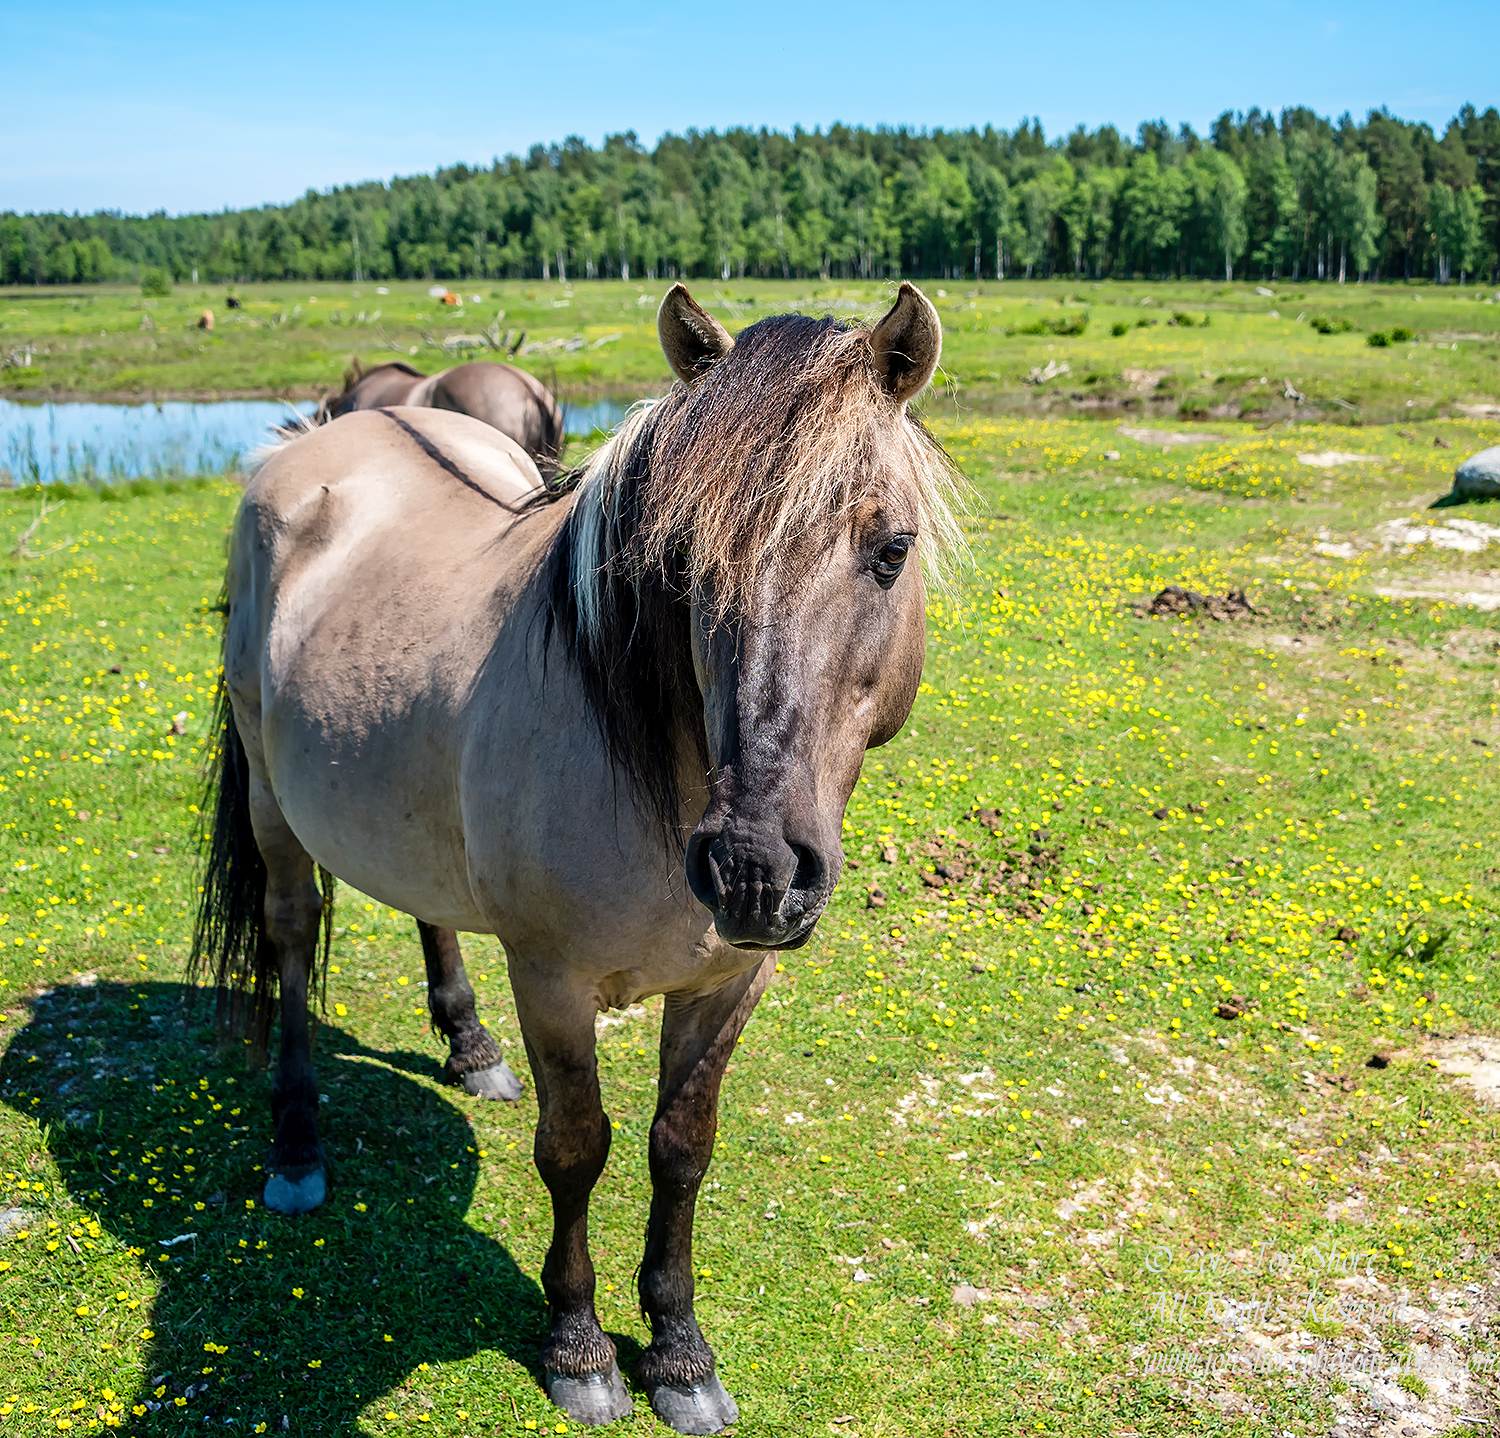 Wild Horse Engure Lake Meadow Latvia June 2017 by Jon Shore. Nikkor 300mm